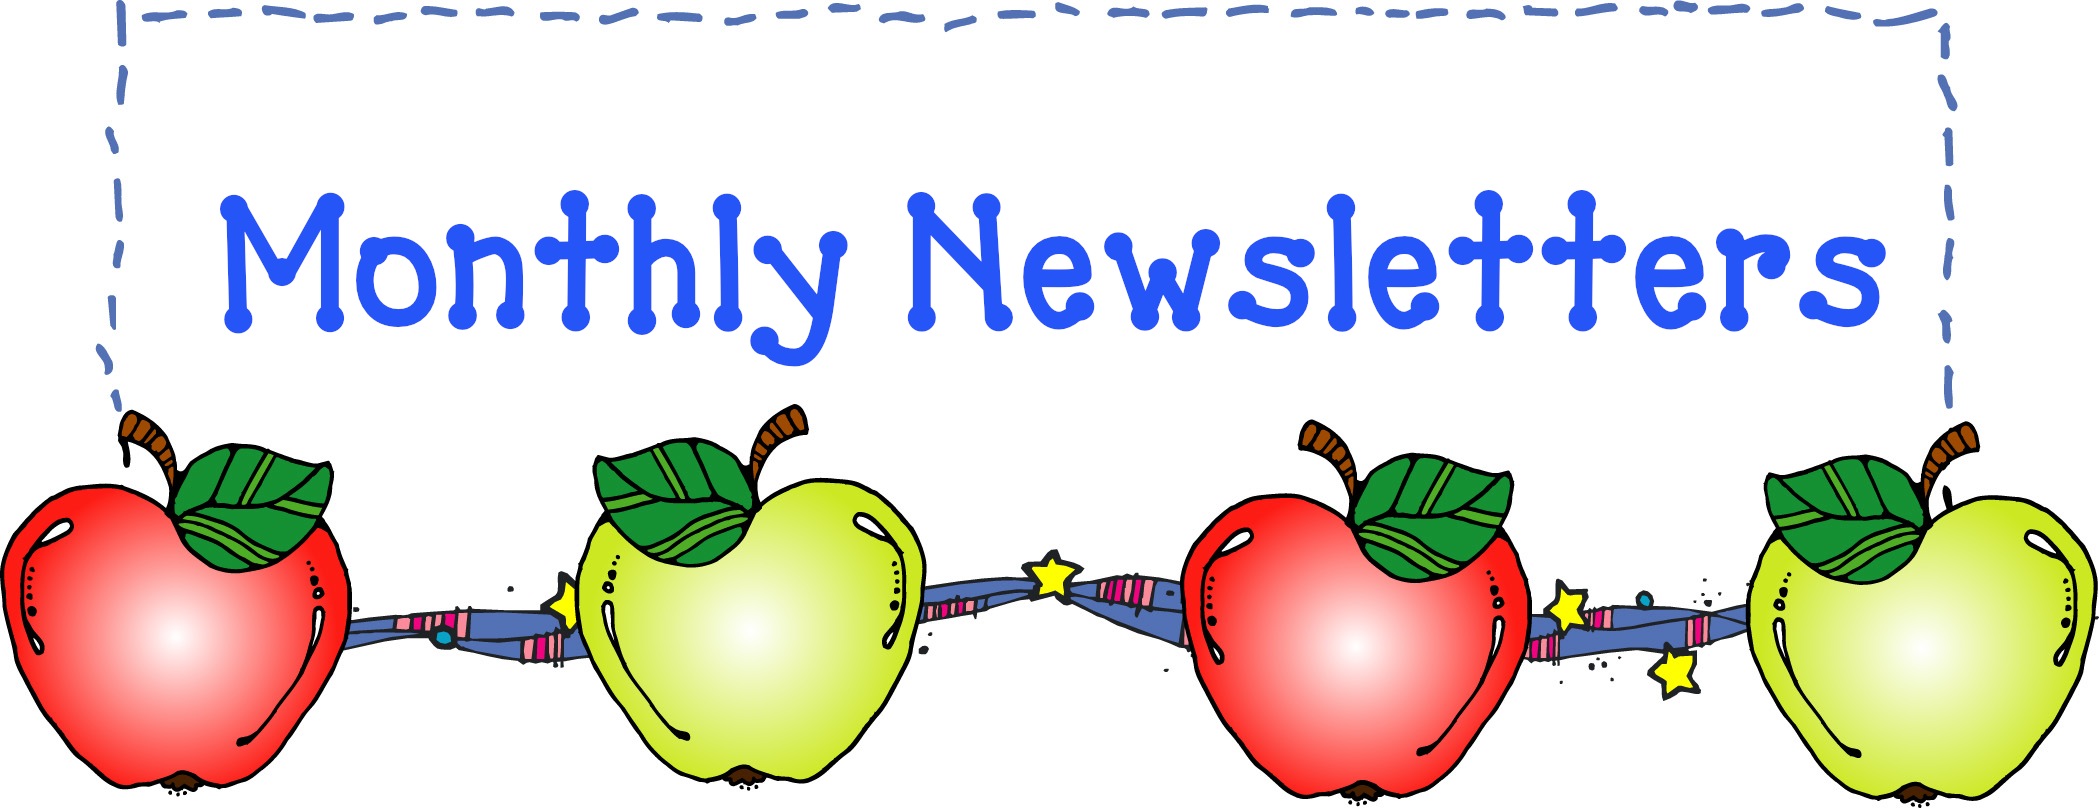 kindergarten clipart newsletter